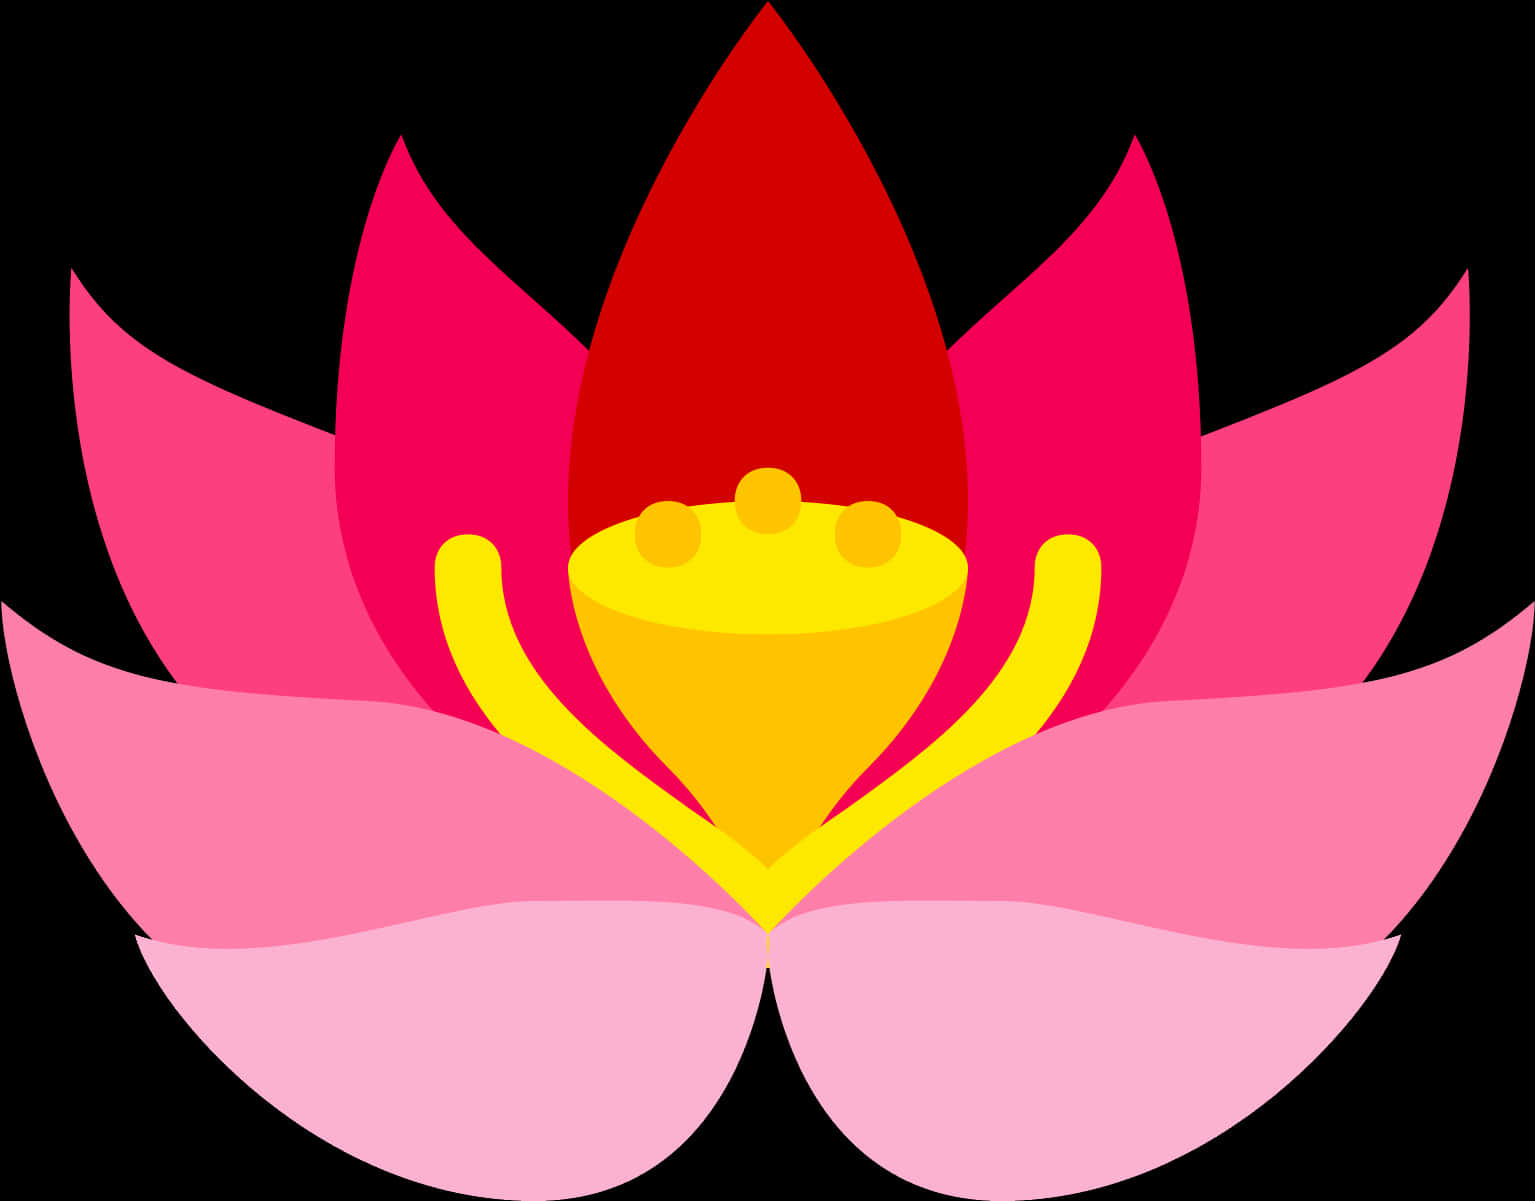 Stylized Lotus Flower Illustration PNG image